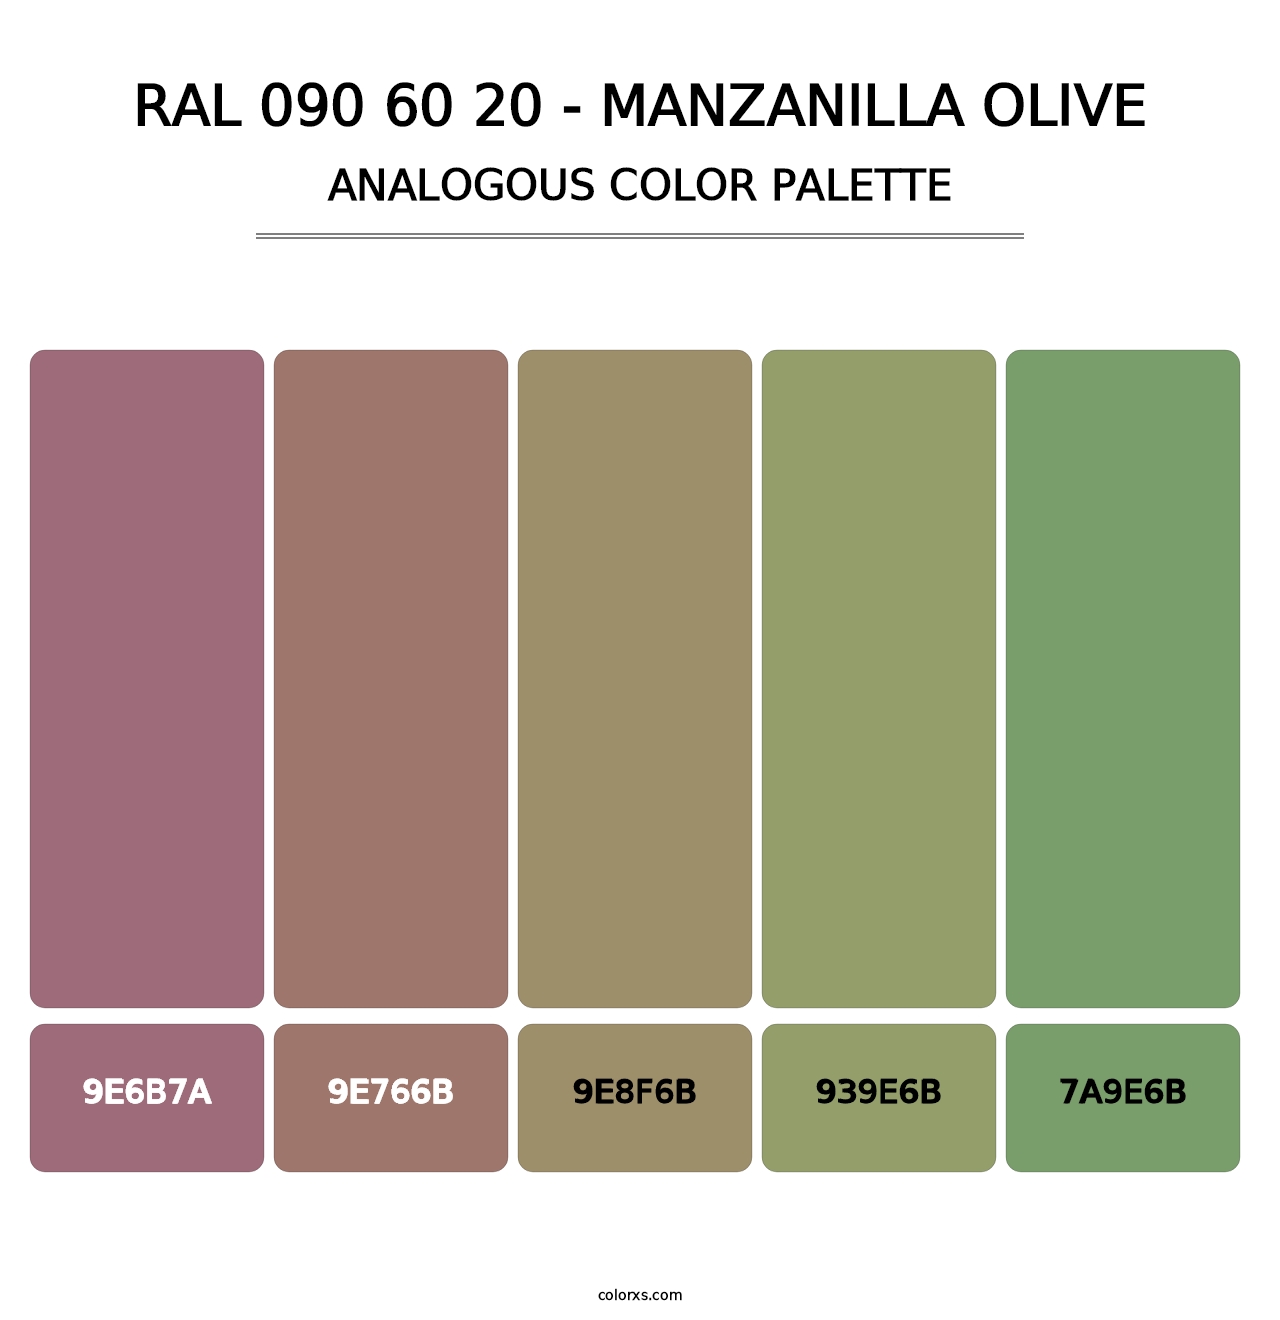 RAL 090 60 20 - Manzanilla Olive - Analogous Color Palette